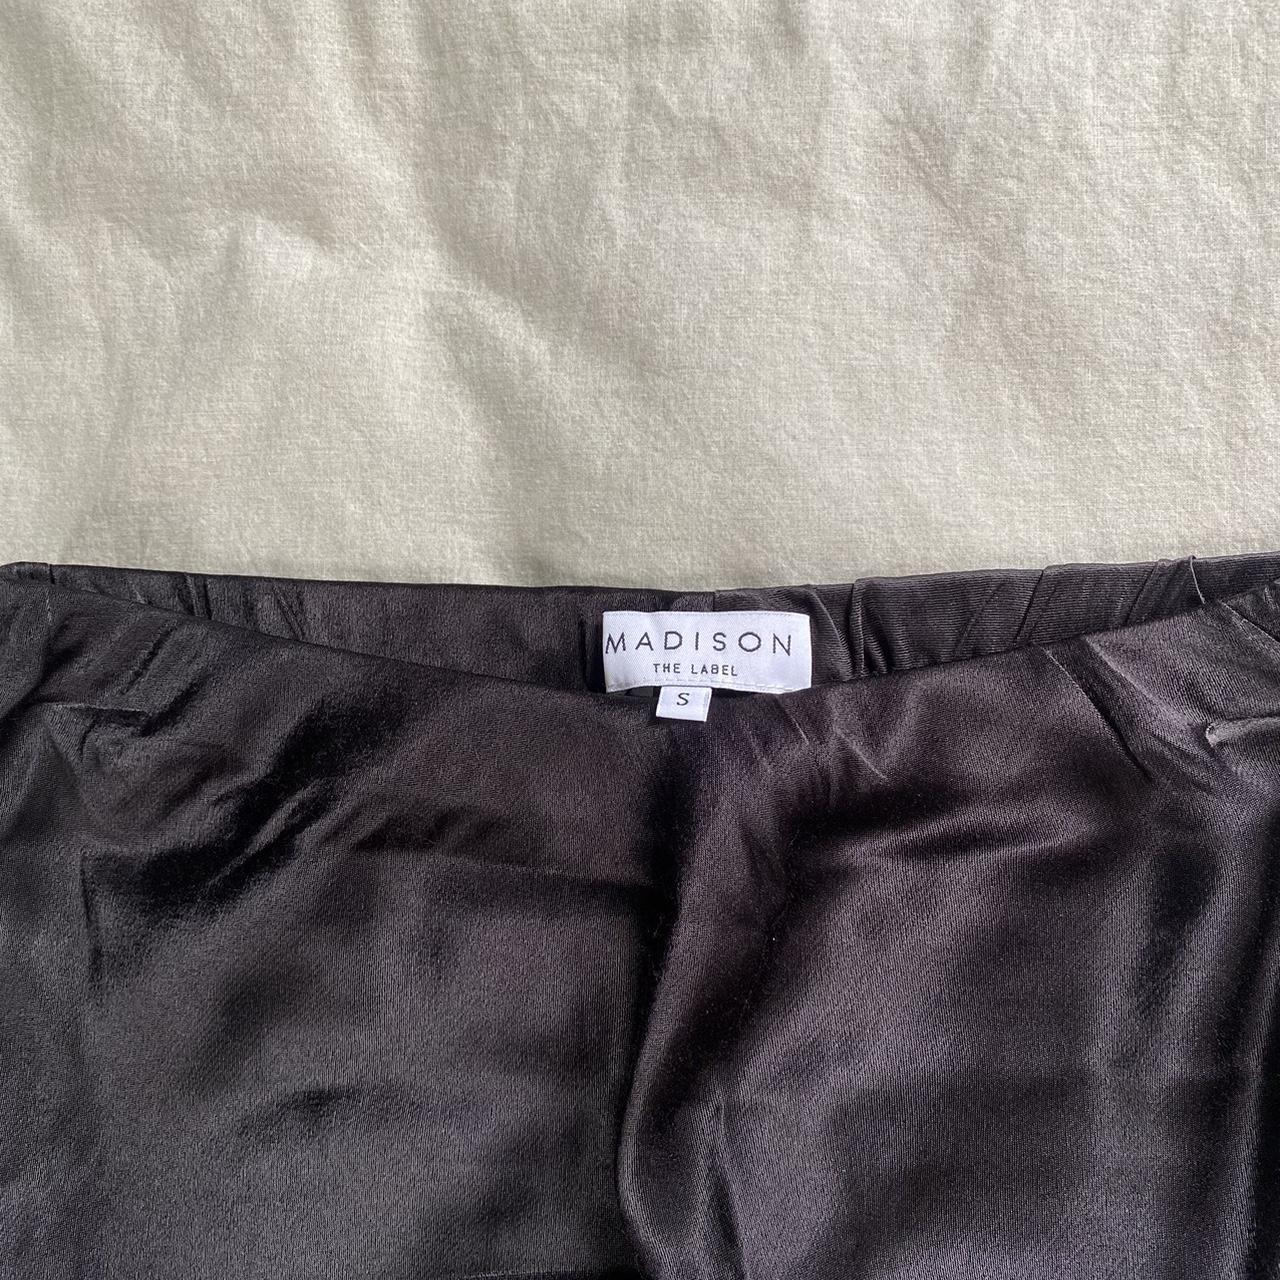 Madison the Label black silk skirt in size S 🖤 - Depop